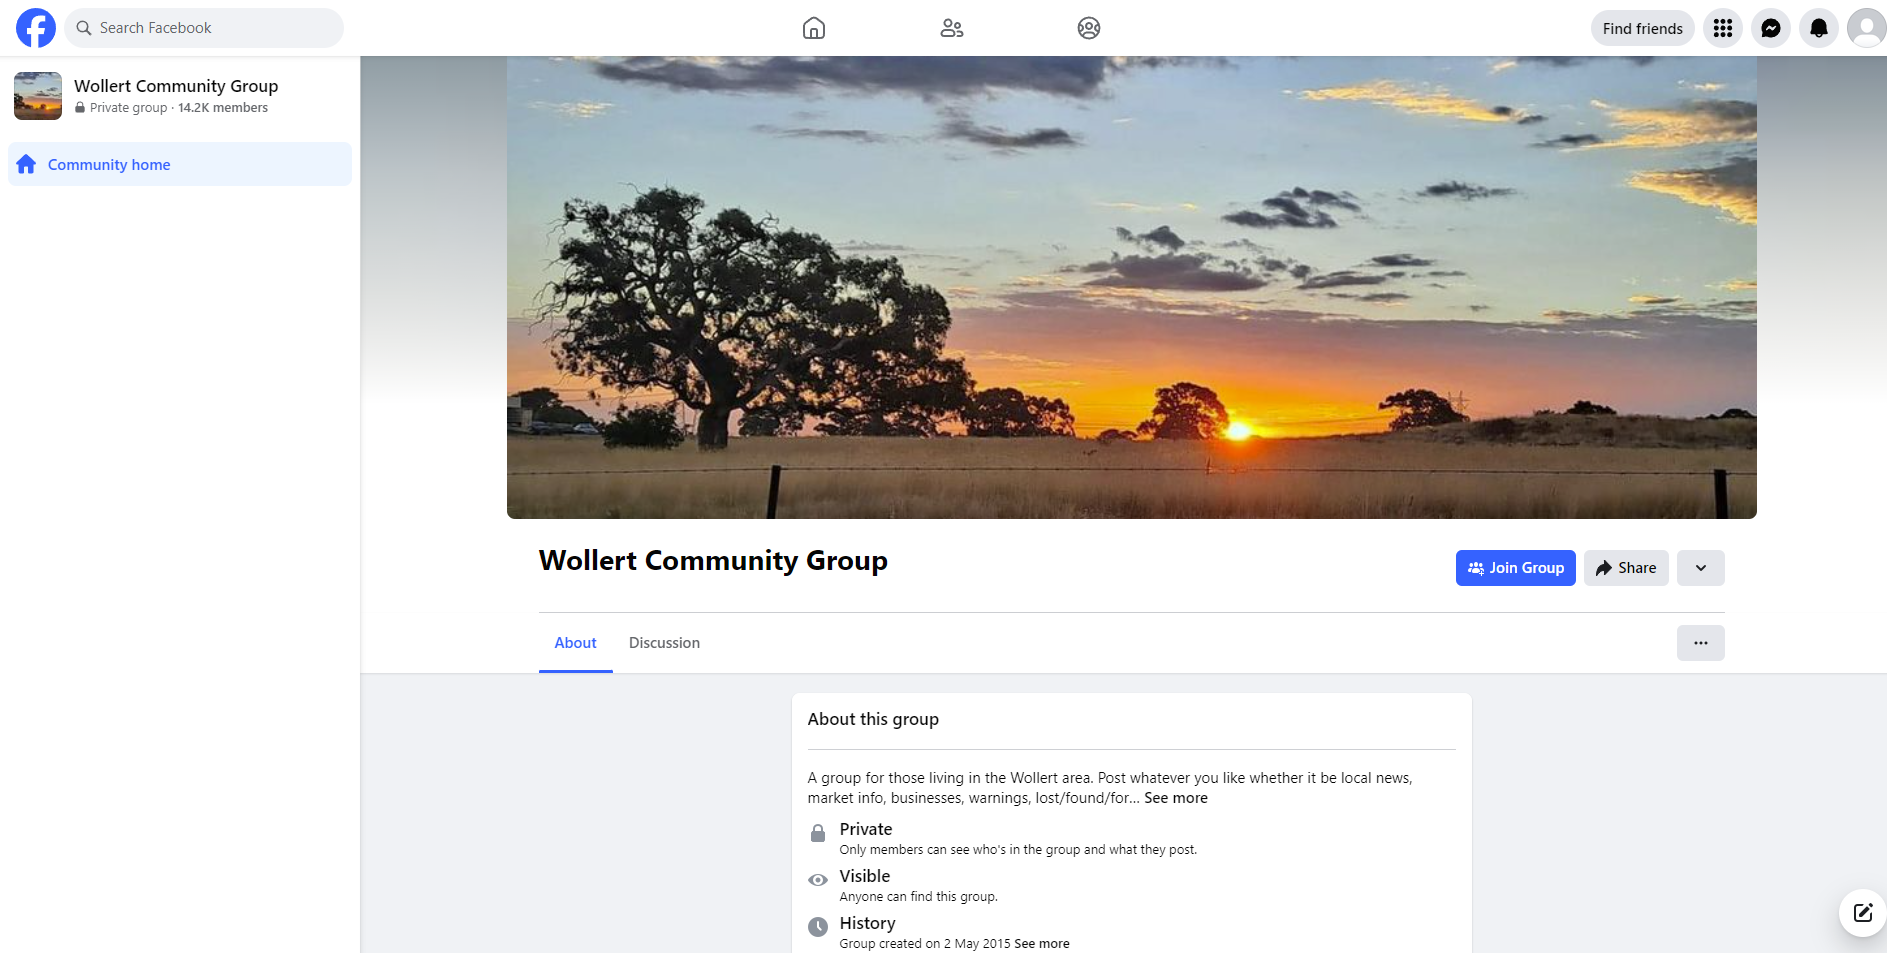 Wollert Community Group